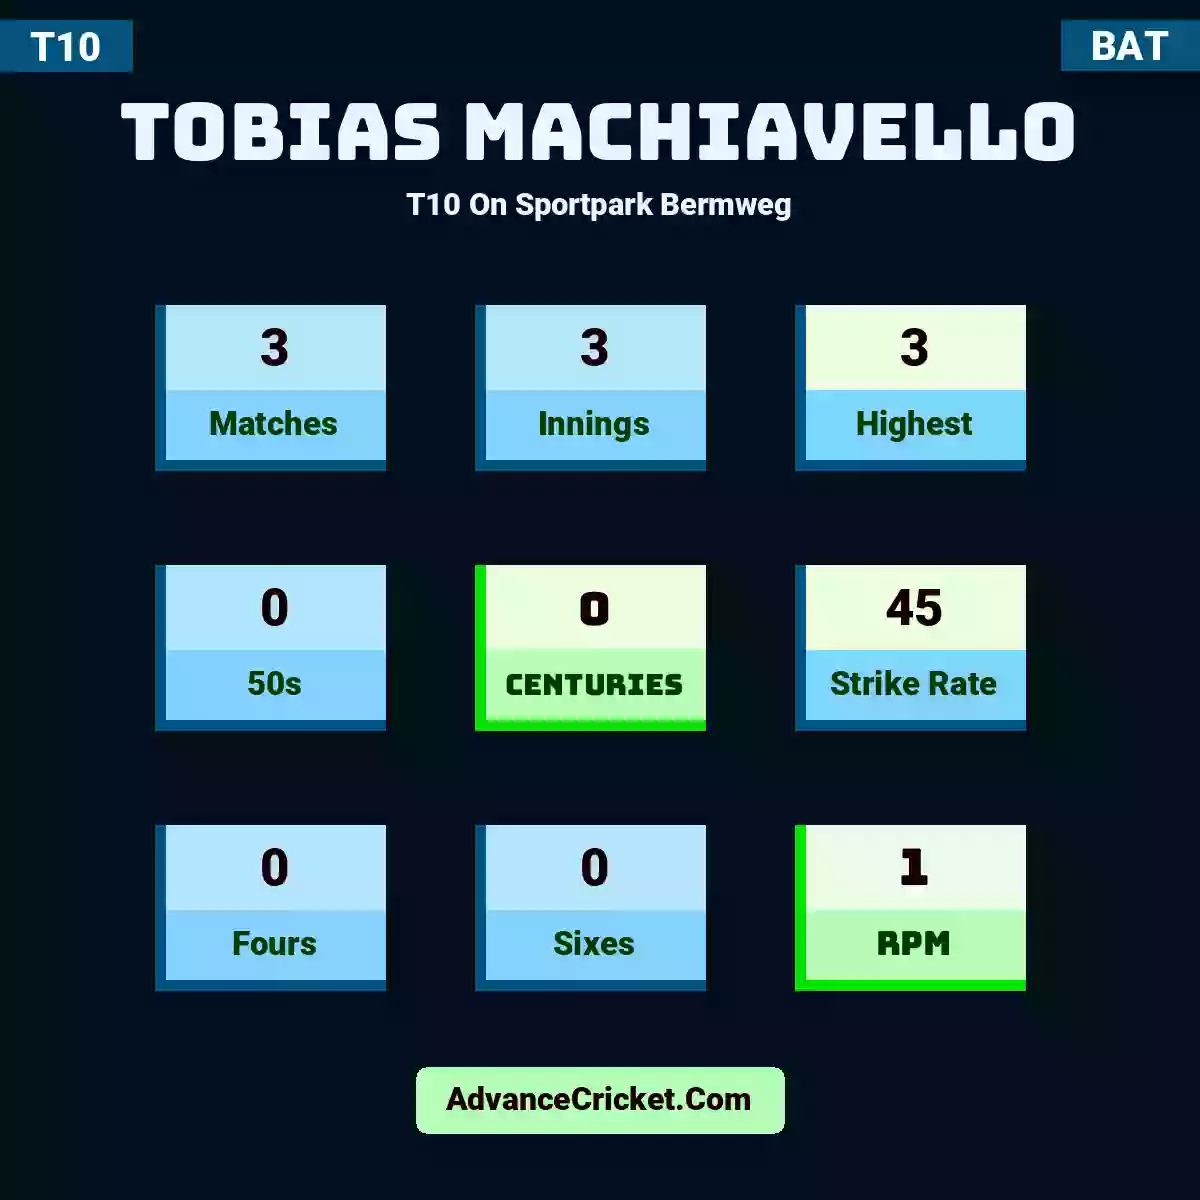 Tobias Machiavello T10  On Sportpark Bermweg, Tobias Machiavello played 3 matches, scored 3 runs as highest, 0 half-centuries, and 0 centuries, with a strike rate of 45. T.Machiavello hit 0 fours and 0 sixes, with an RPM of 1.